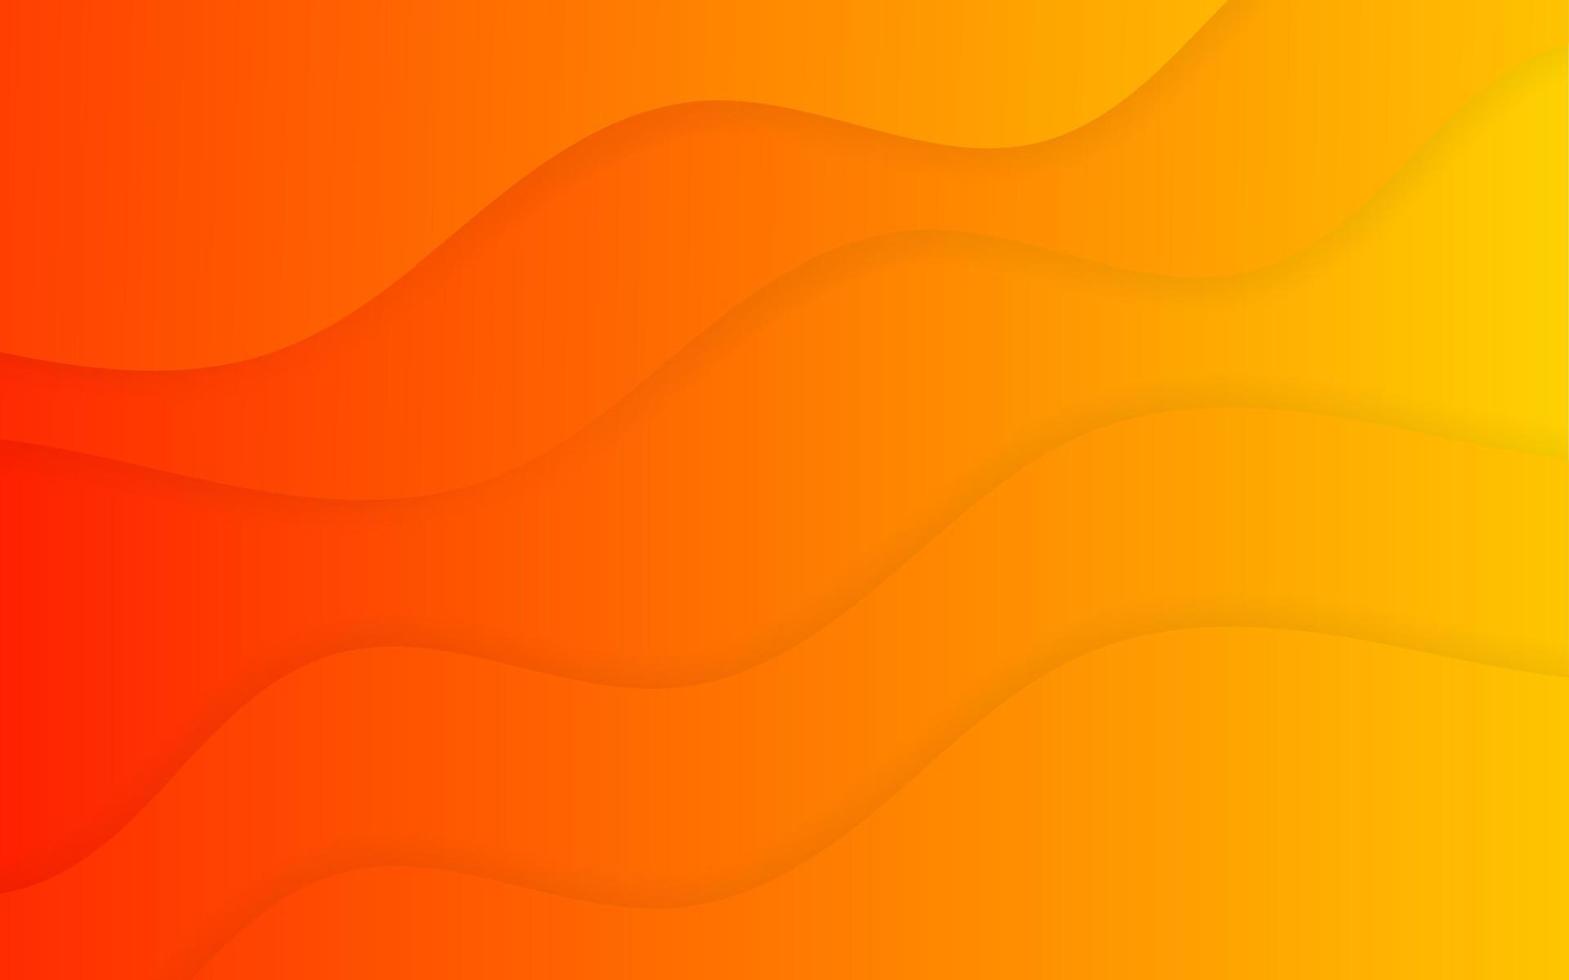 Orange waves background vector. Fluid gradient shapes composition vector